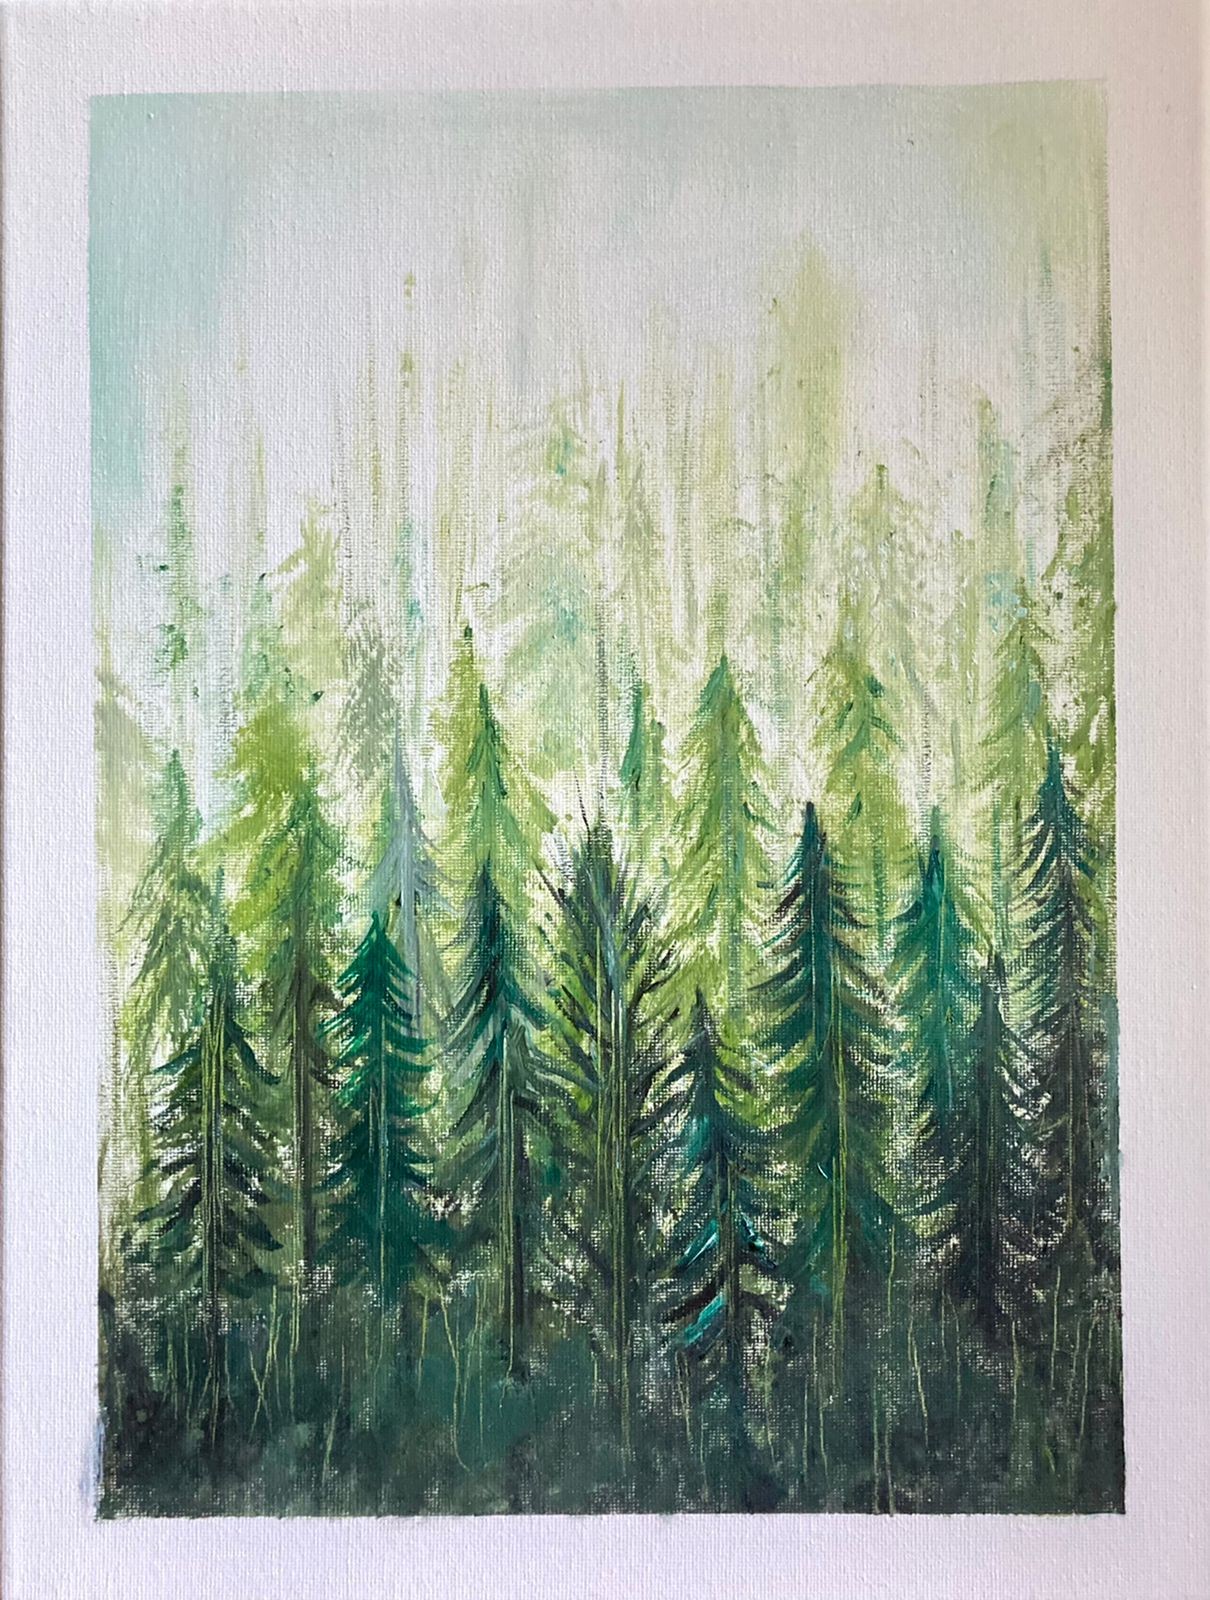 Treeline on canvas by Anandi Goonewardene